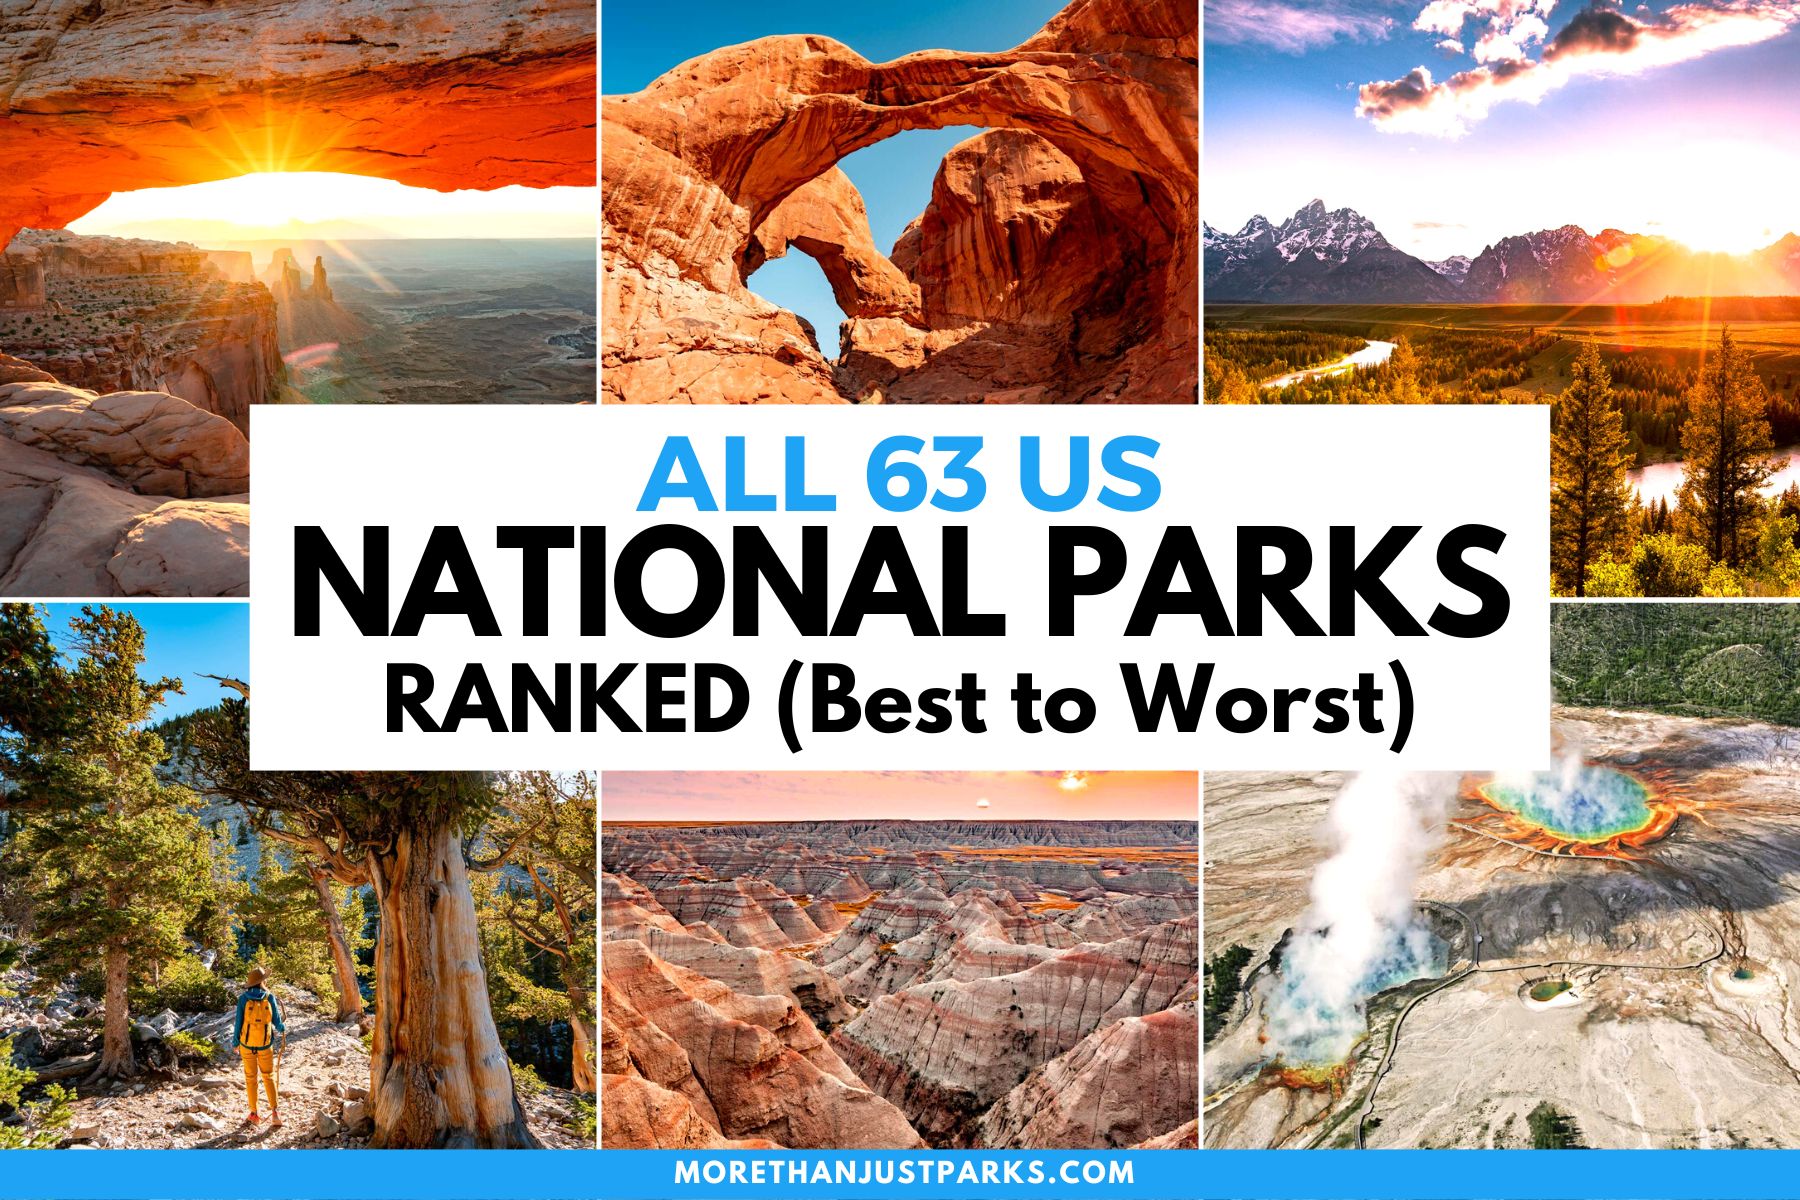 Denali, The National Parks: America's Best Idea, Ken Burns